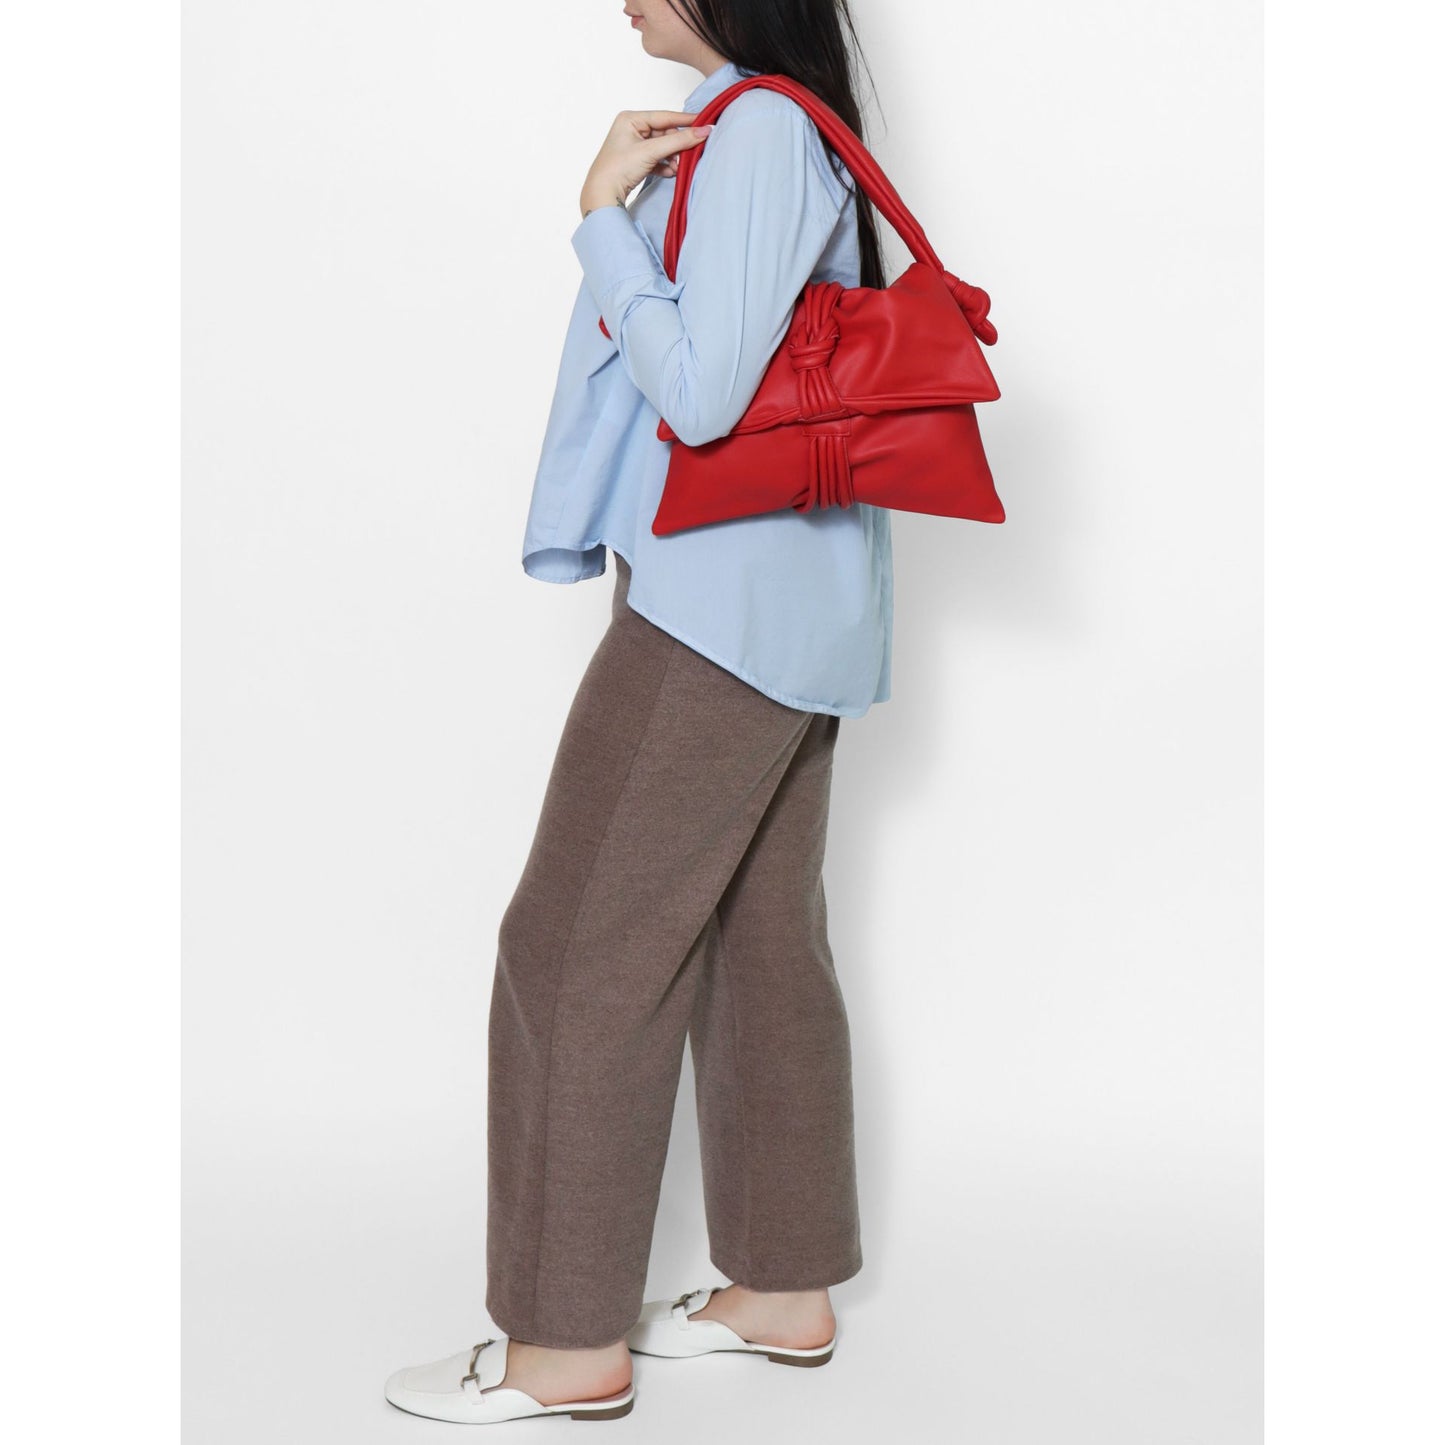 Monica Bini Shoulder Bags 